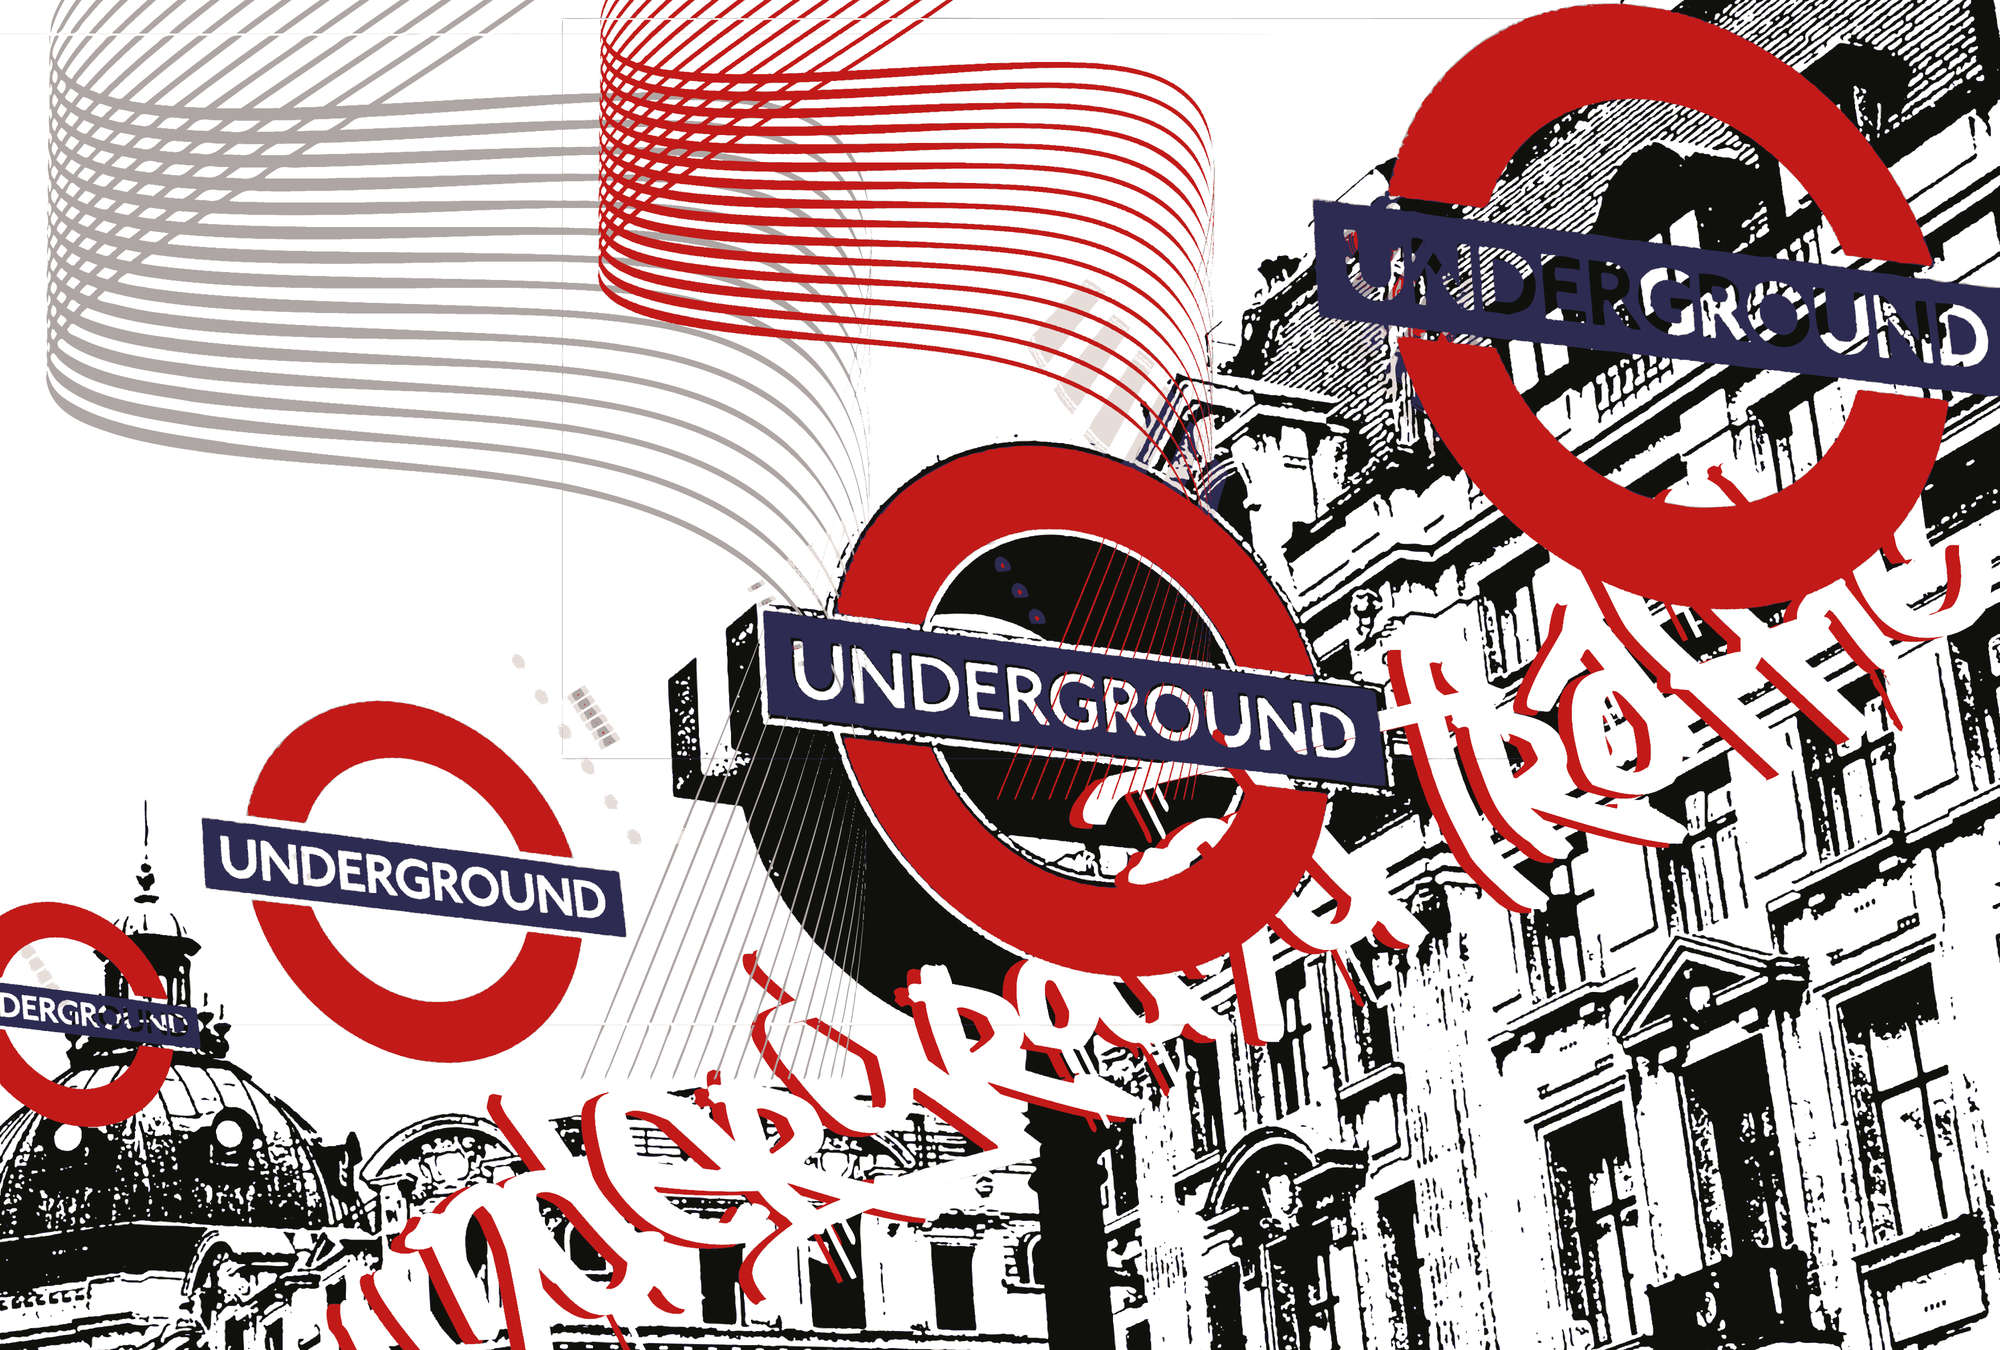             Underground - wall mural London Style, Urban & Modern
        